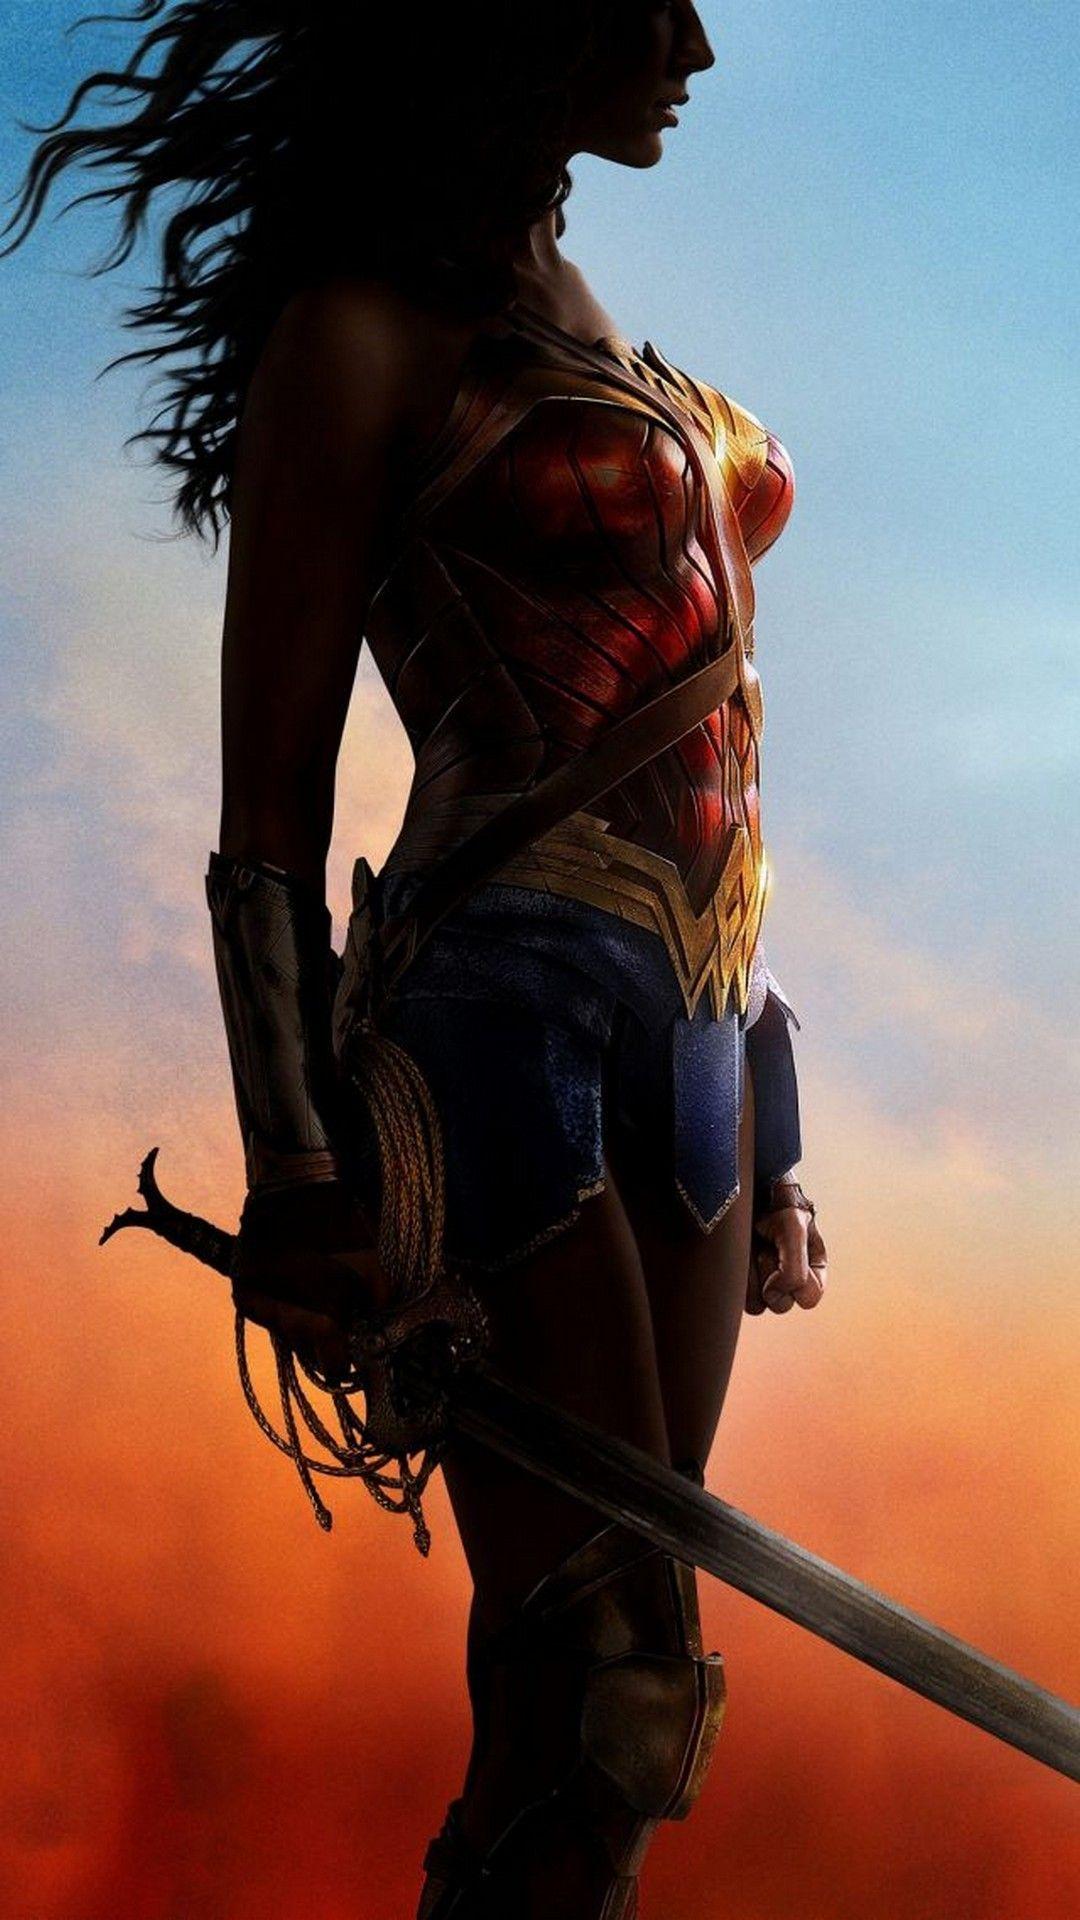 Wonder Woman Wallpaper For Mobile .com